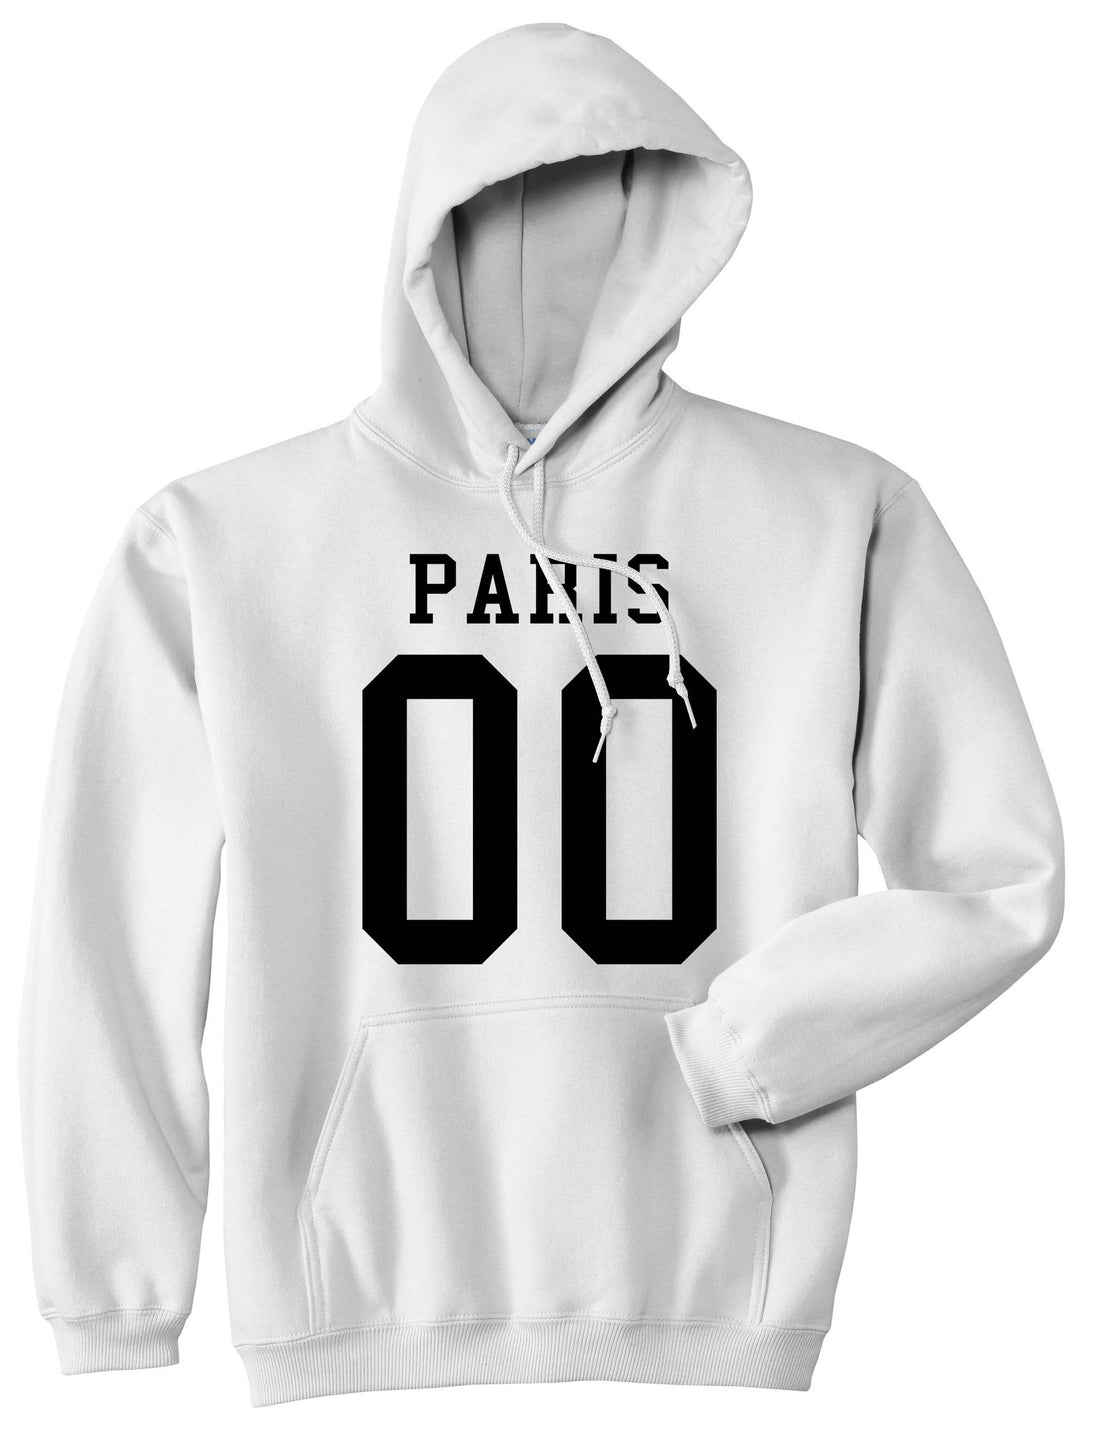 Paris Team 00 Jersey Boys Kids Pullover Hoodie Hoody in White By Kings Of NY